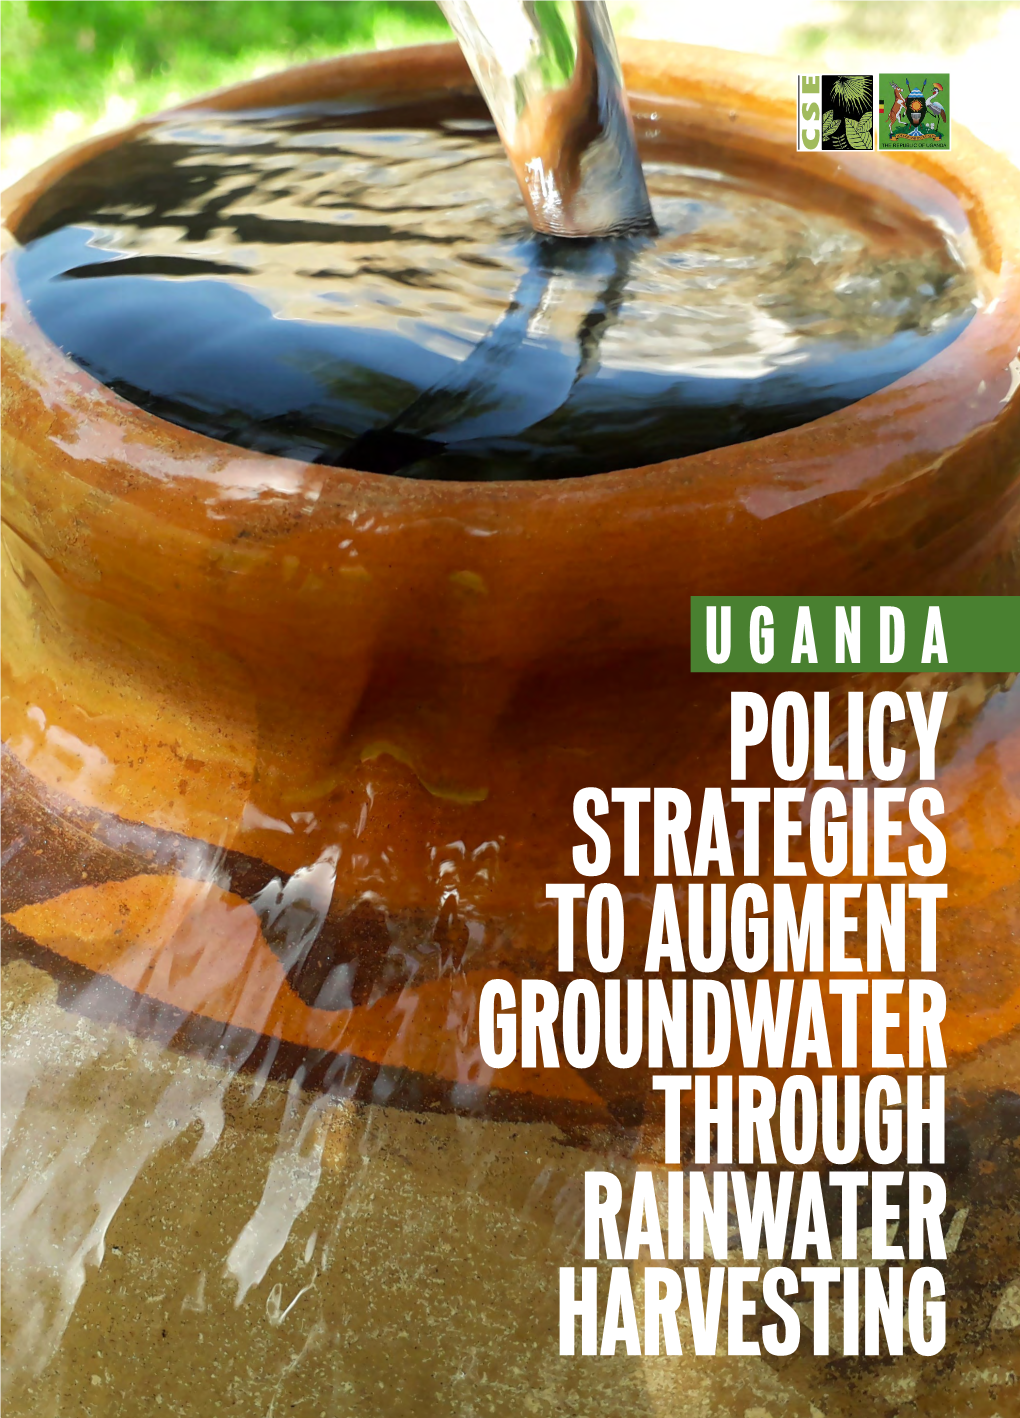 Policy Strategies to Augment Groundwater Through Rainwater Harvesting